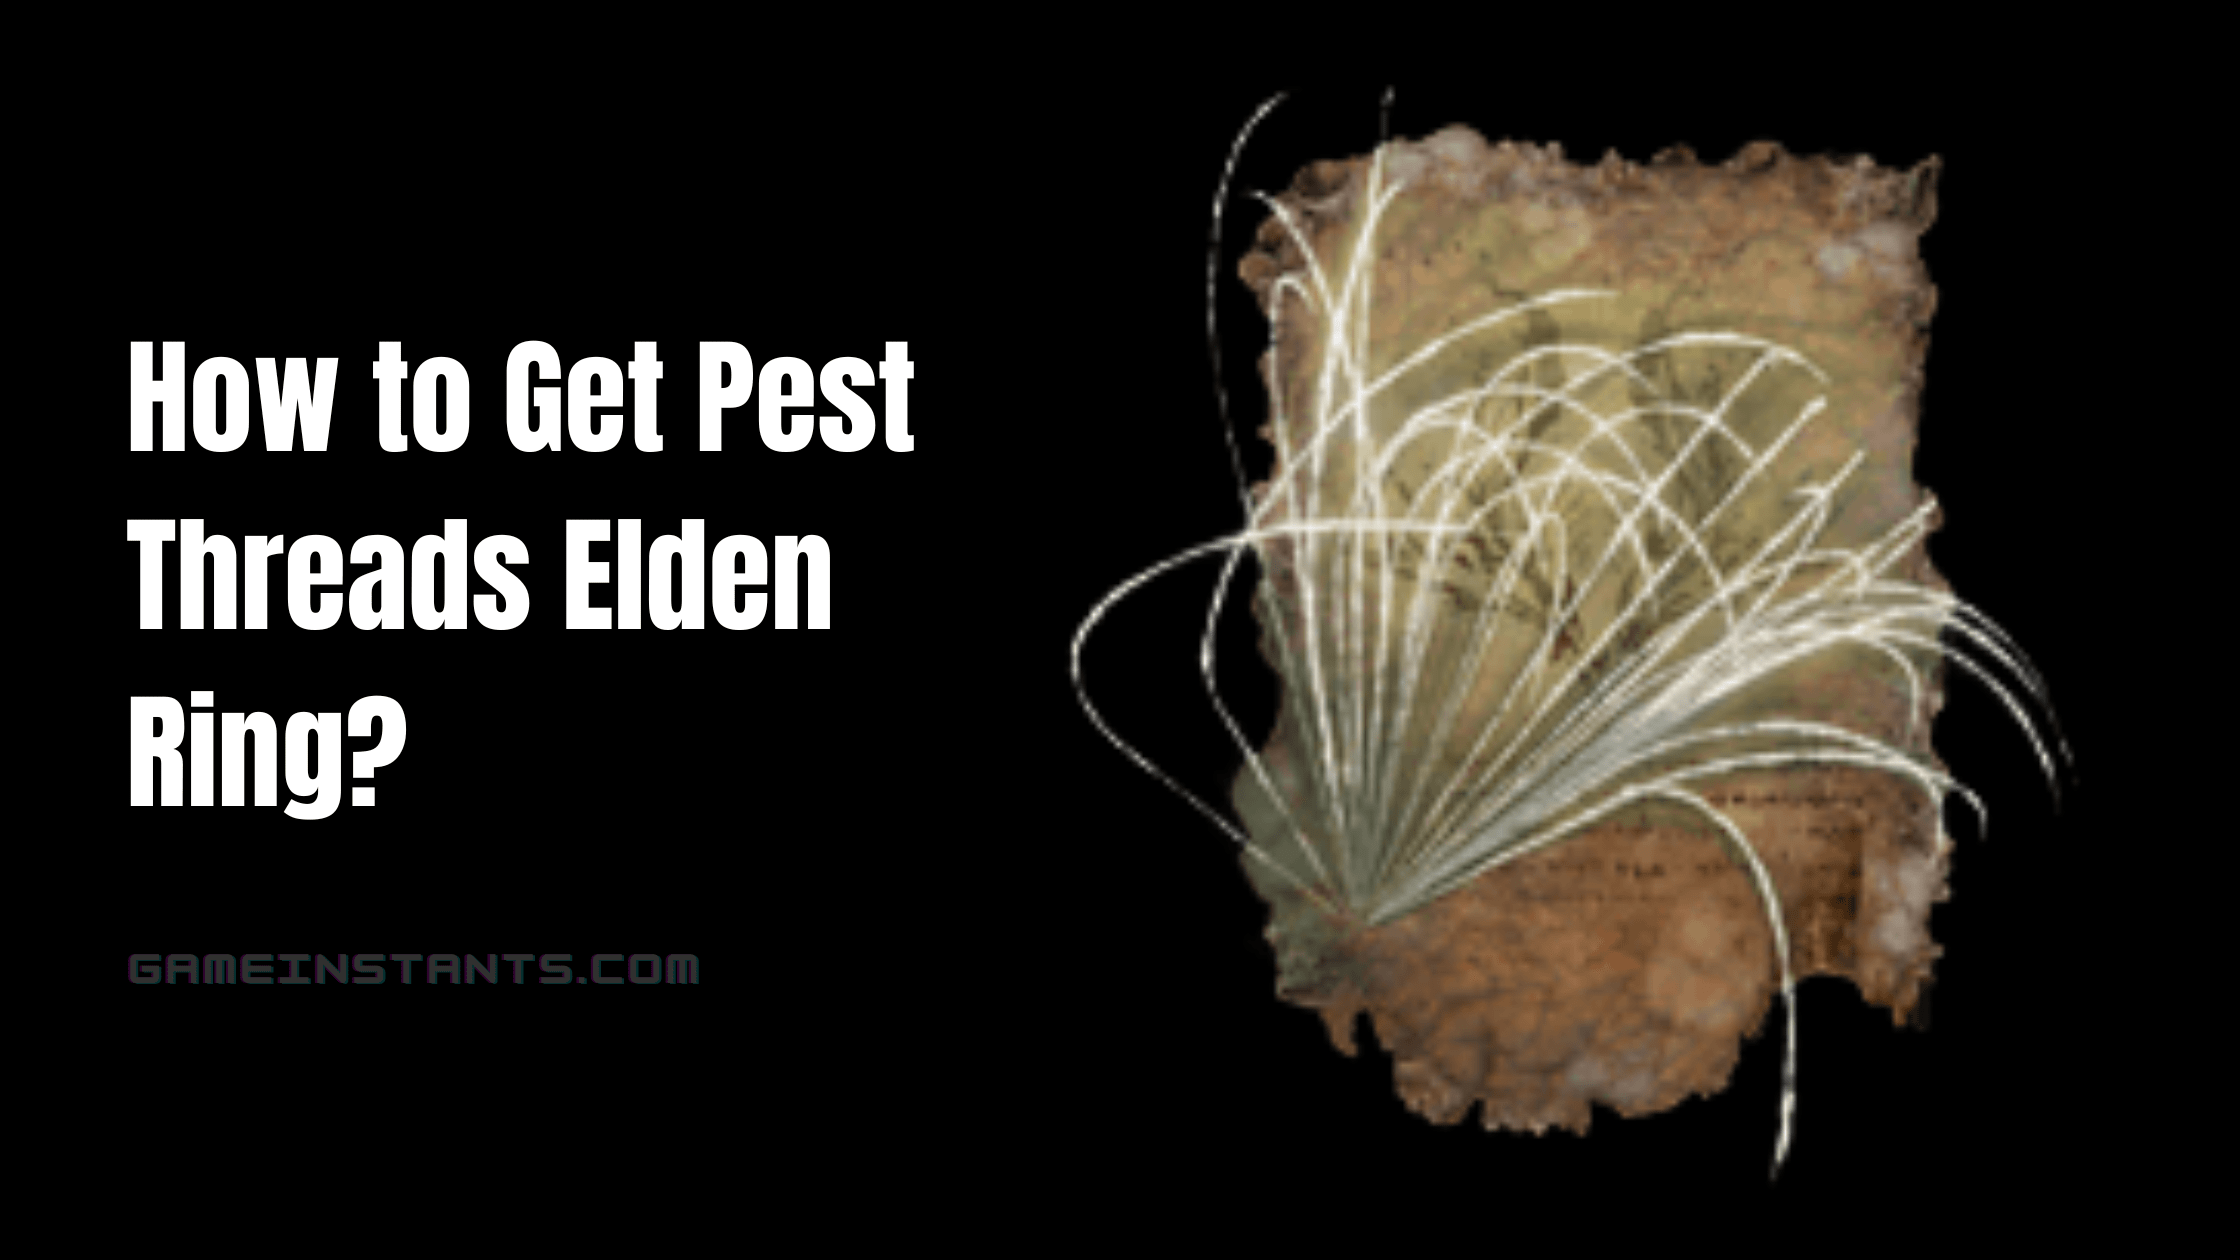 How to Get Pest Threads Elden Ring?